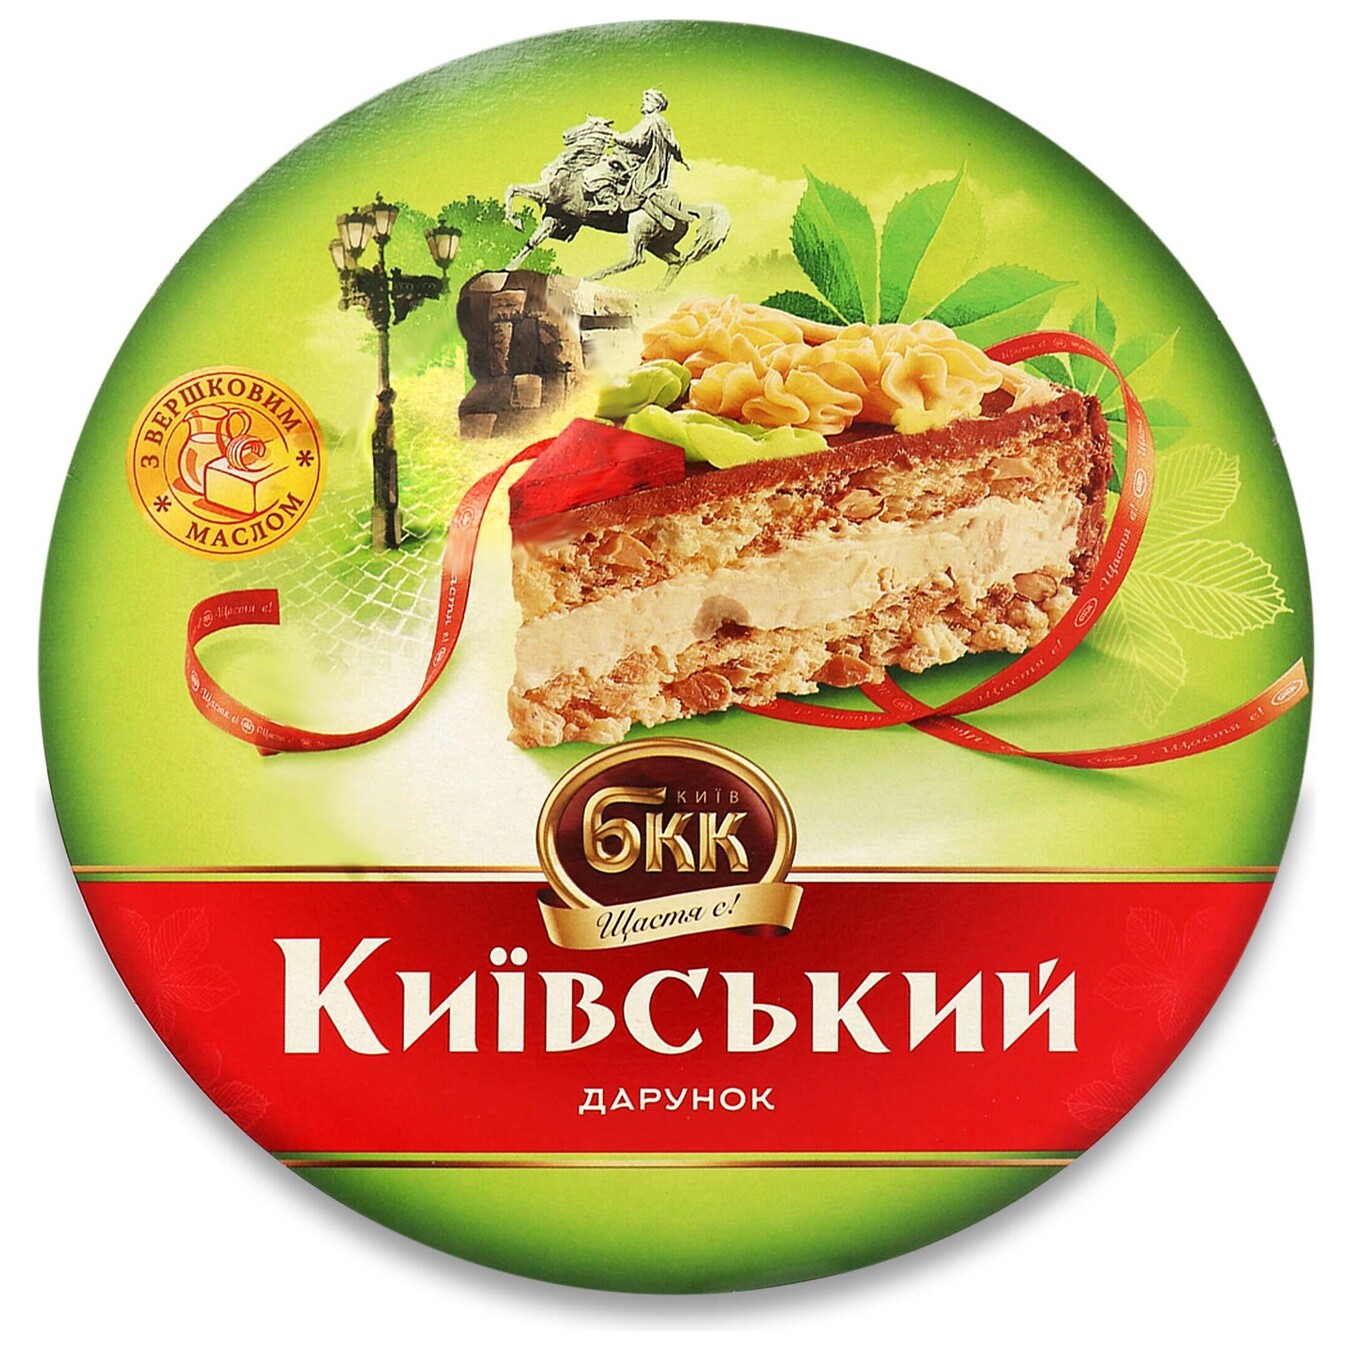 BKK Cake Kyiv gift with peanuts 450g